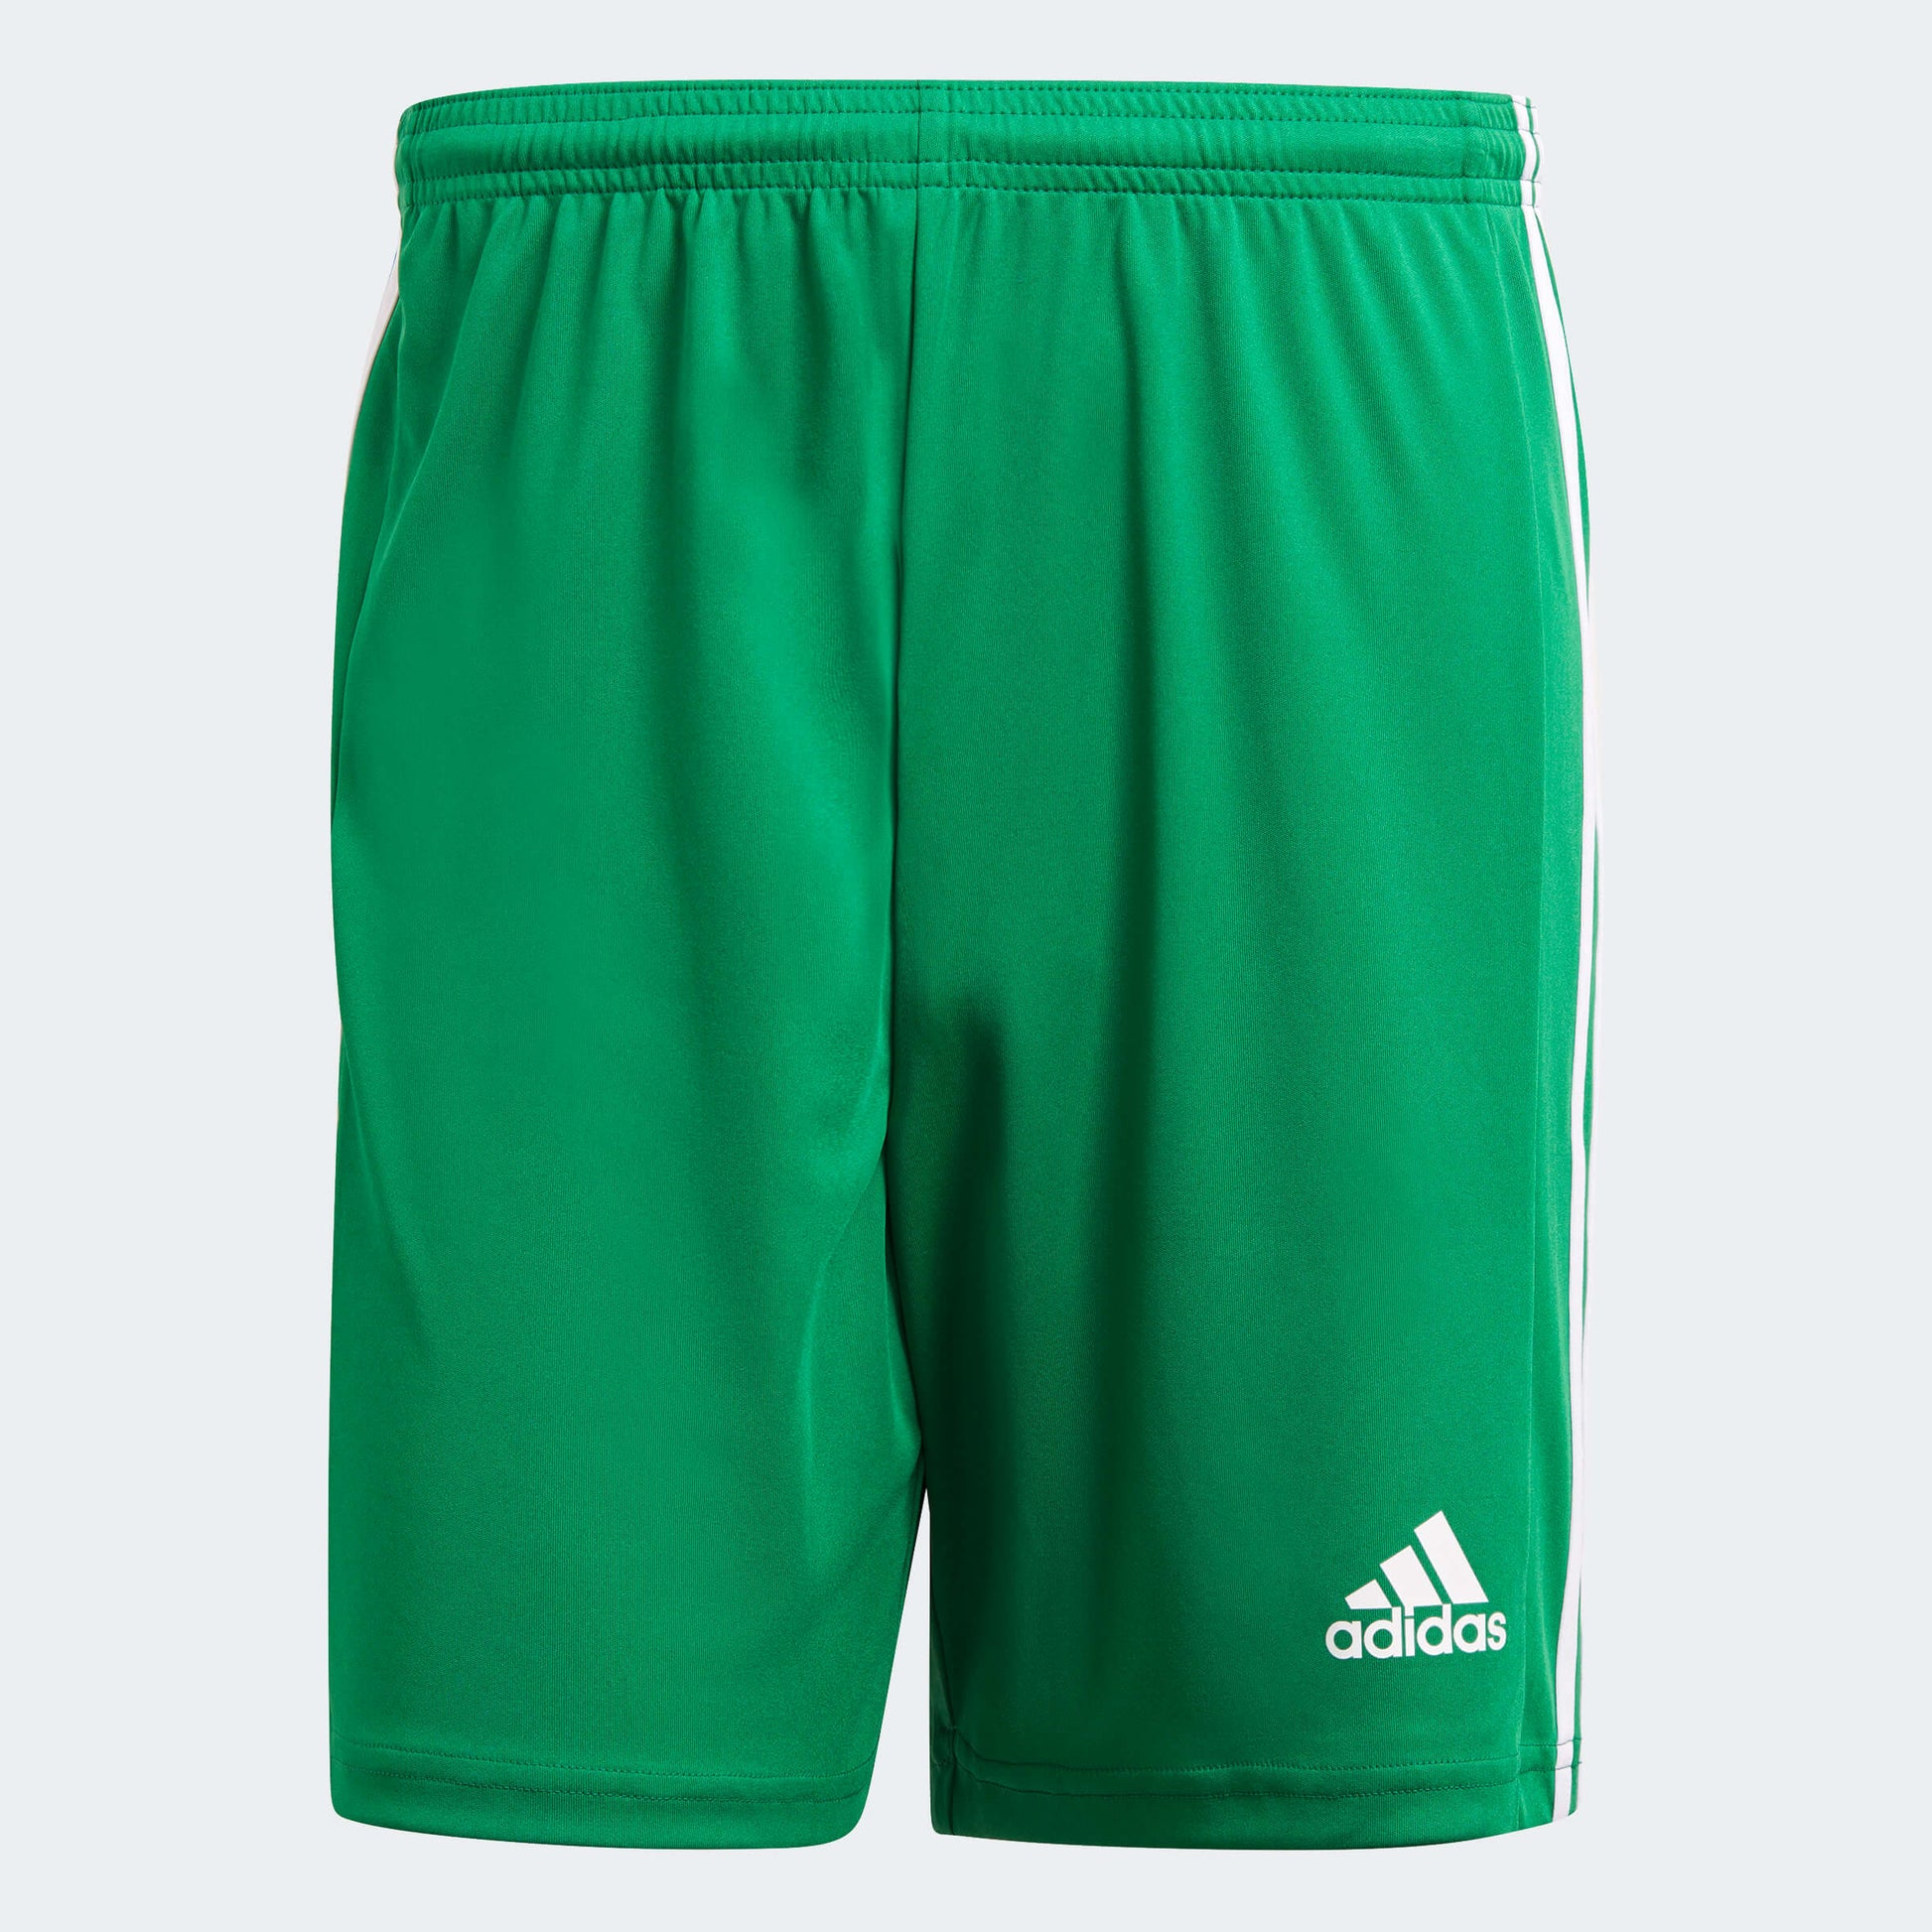  adidas Squadra 21 Shorts Green-White (Front)